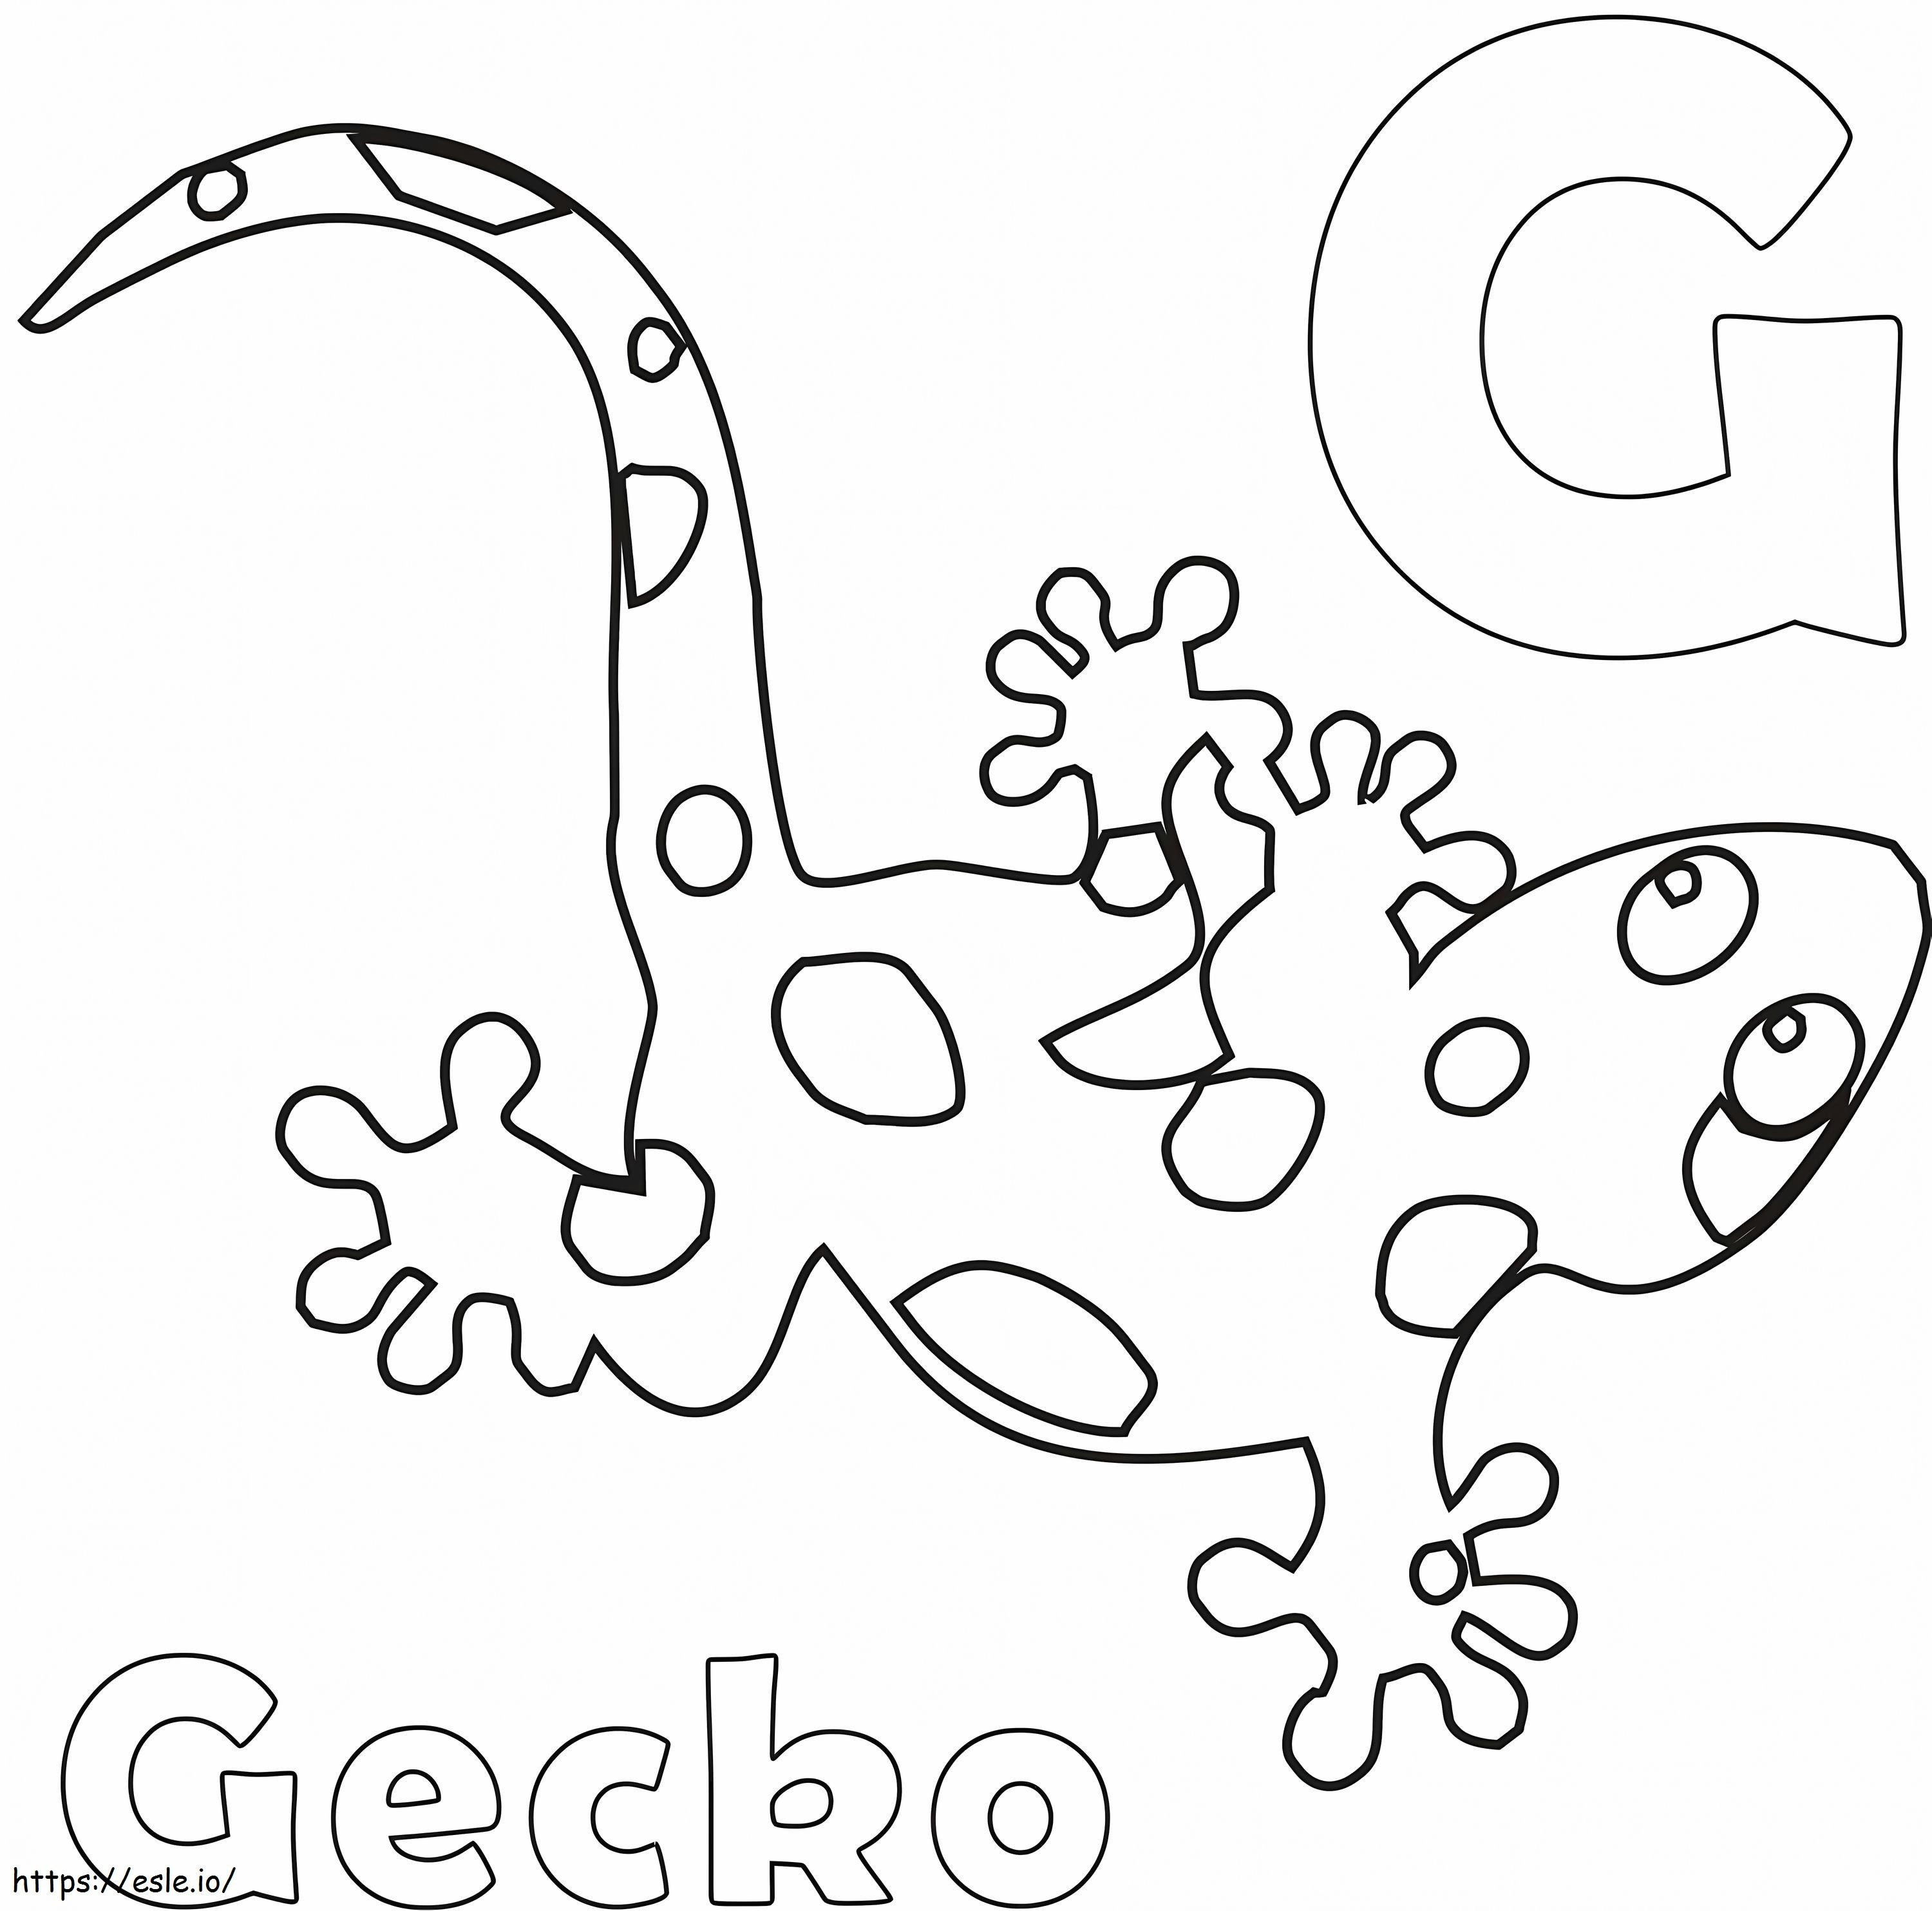 Litera G I Gekon kolorowanka